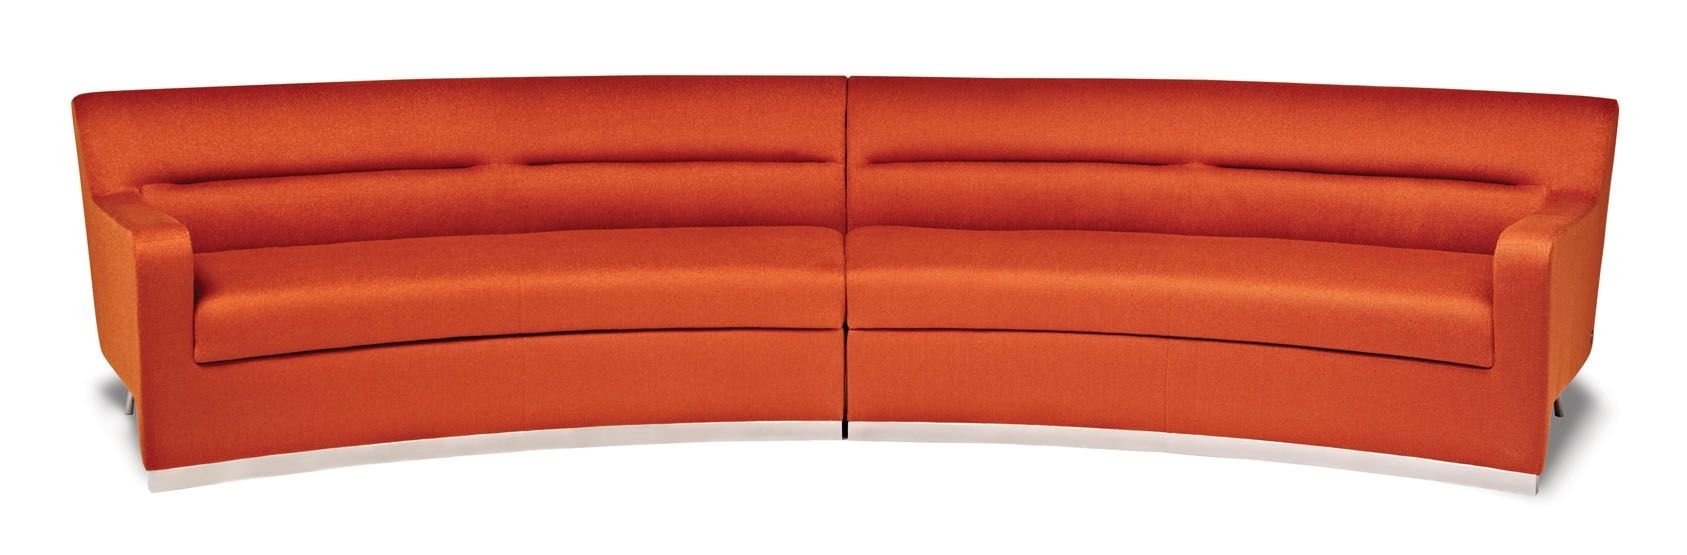 American Leather Niagara Sectional Sofa | Modern Furniture Pertaining To Niagara Sectional Sofas (View 8 of 10)